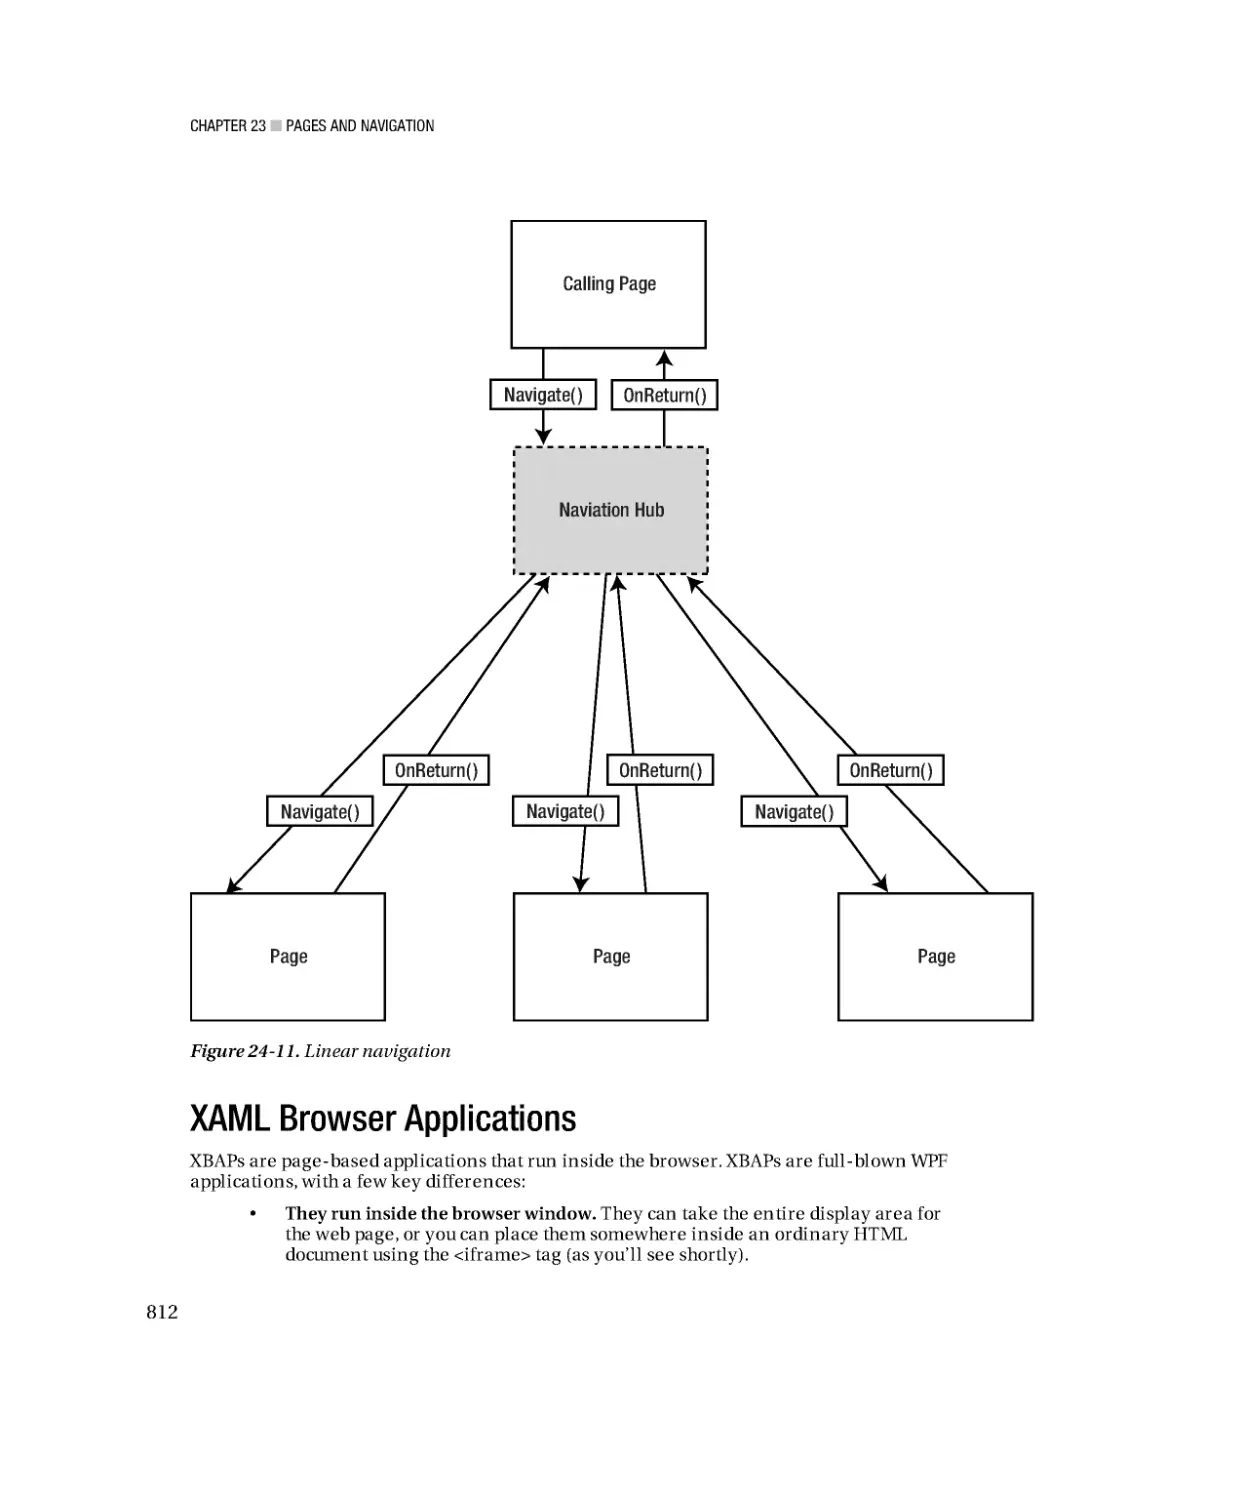 XAML Browser Applications